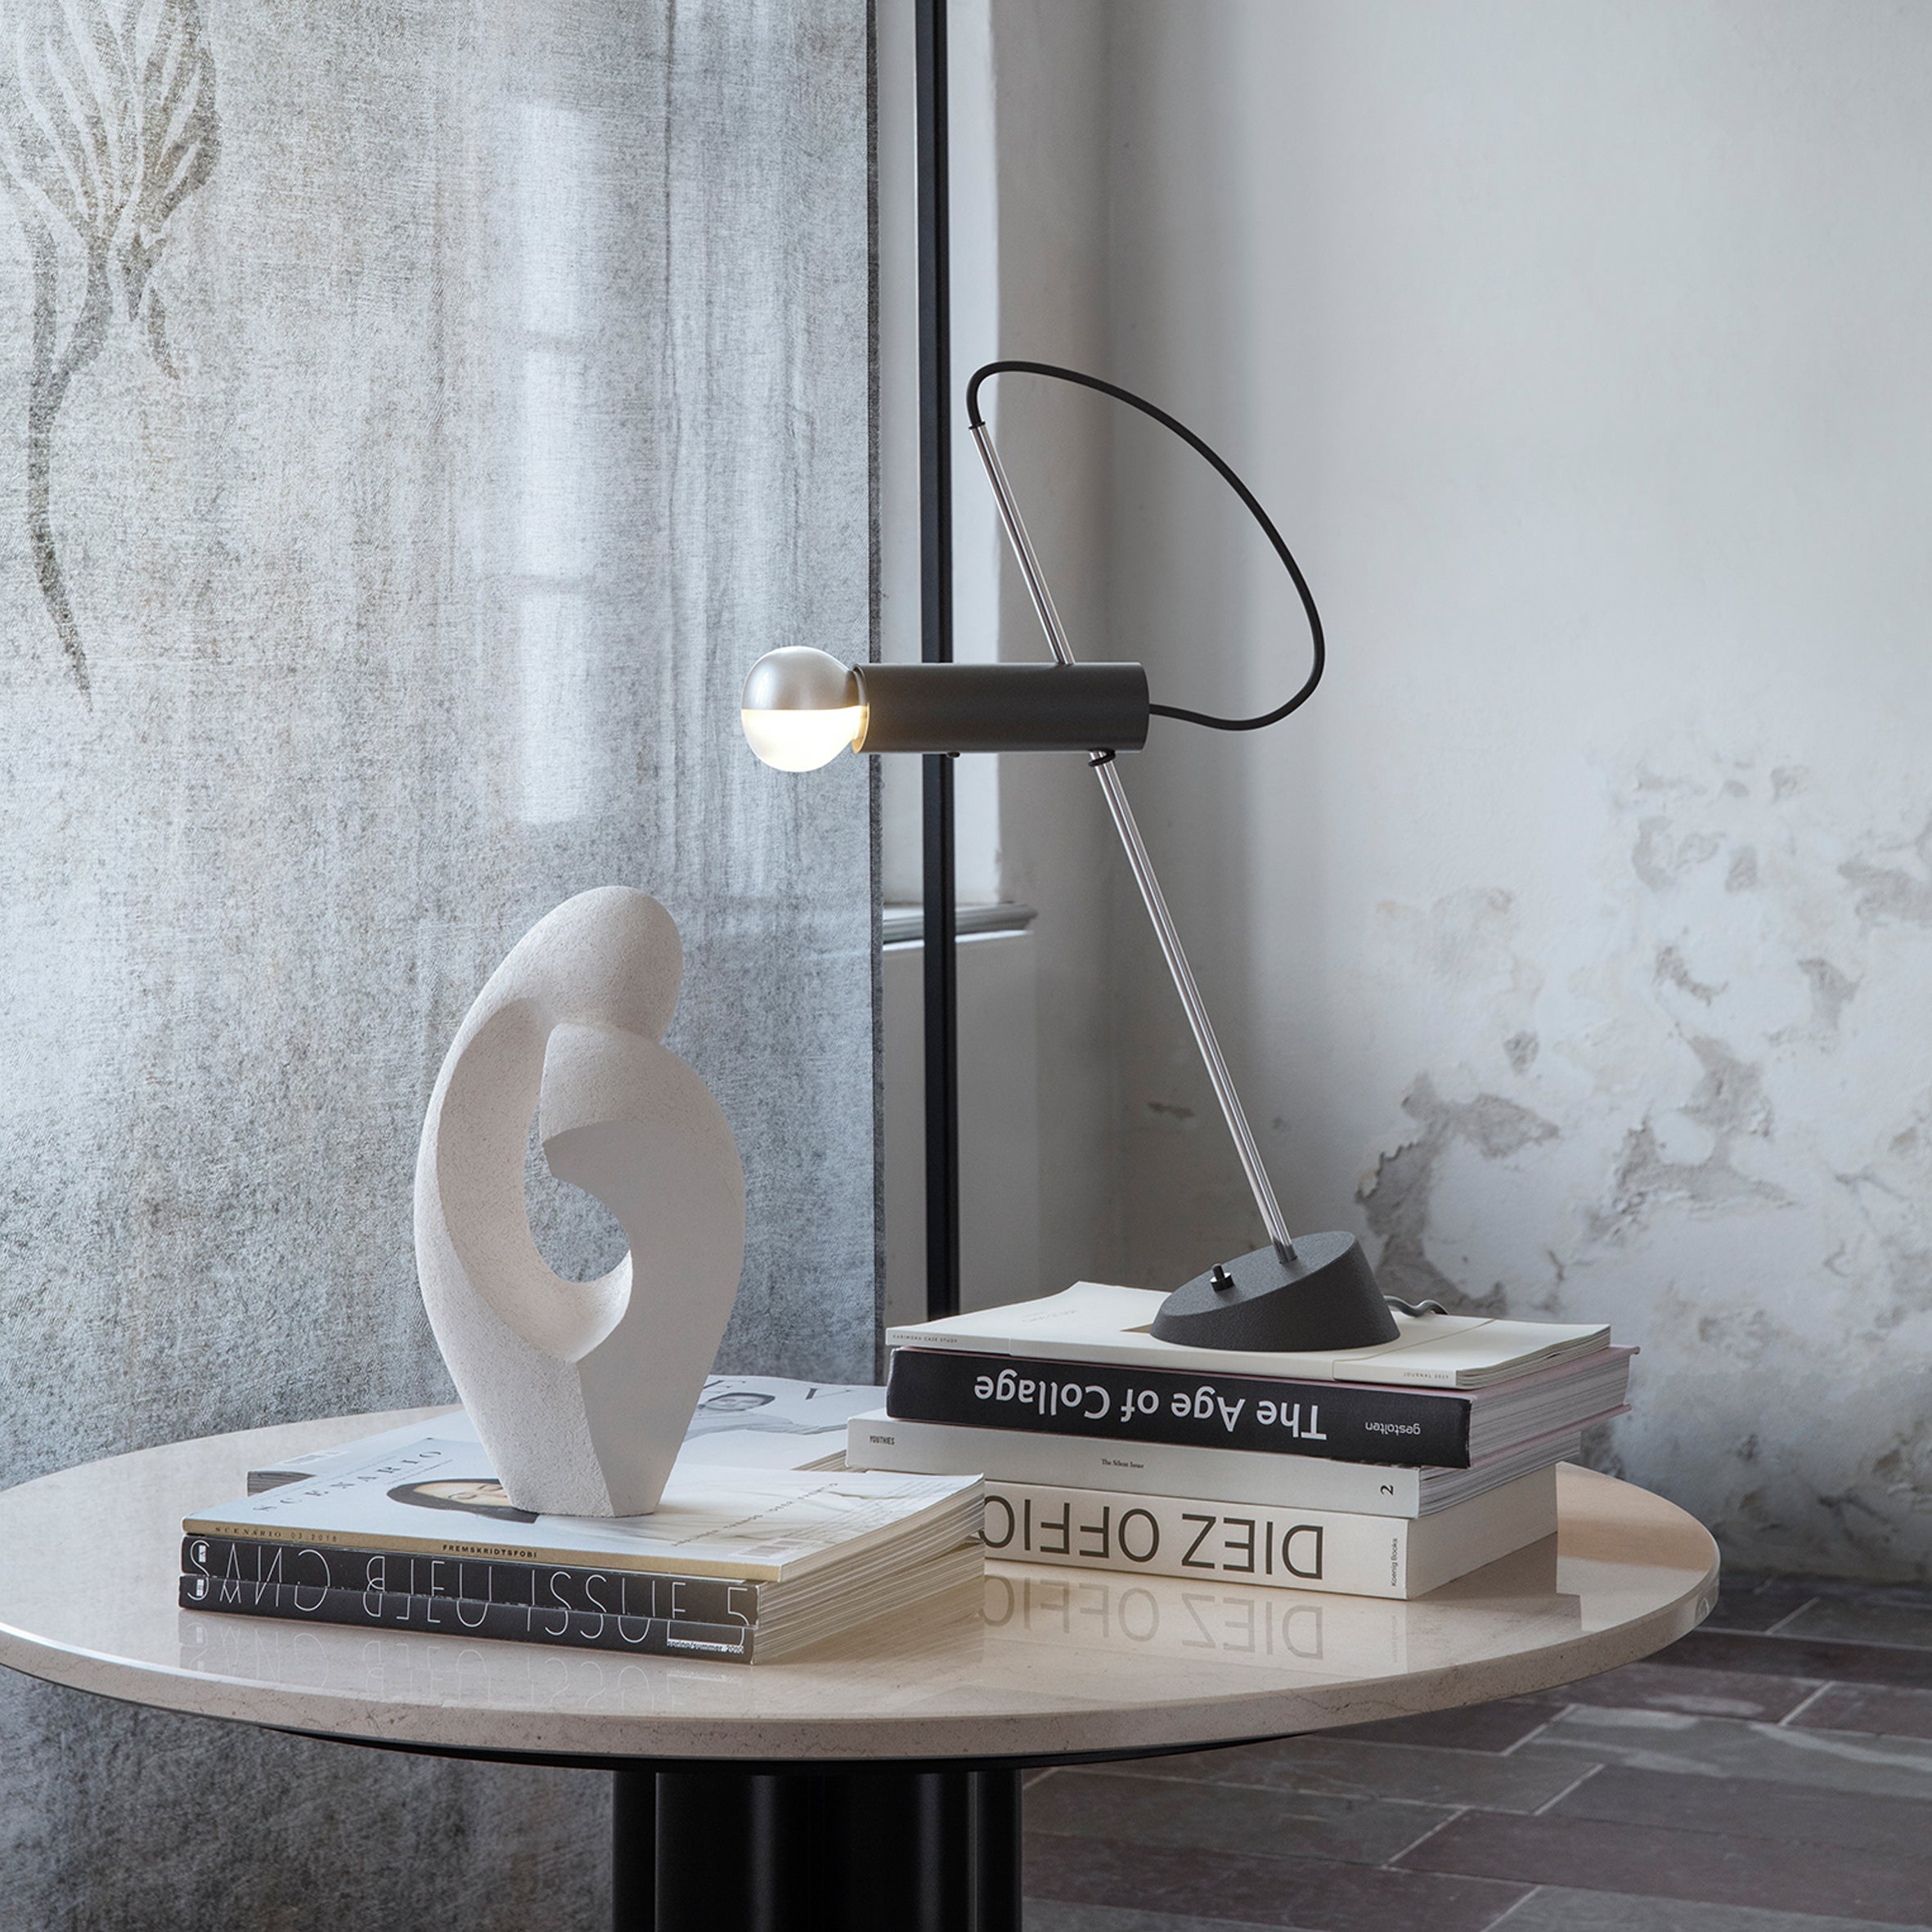 Model 566 Table Lamp